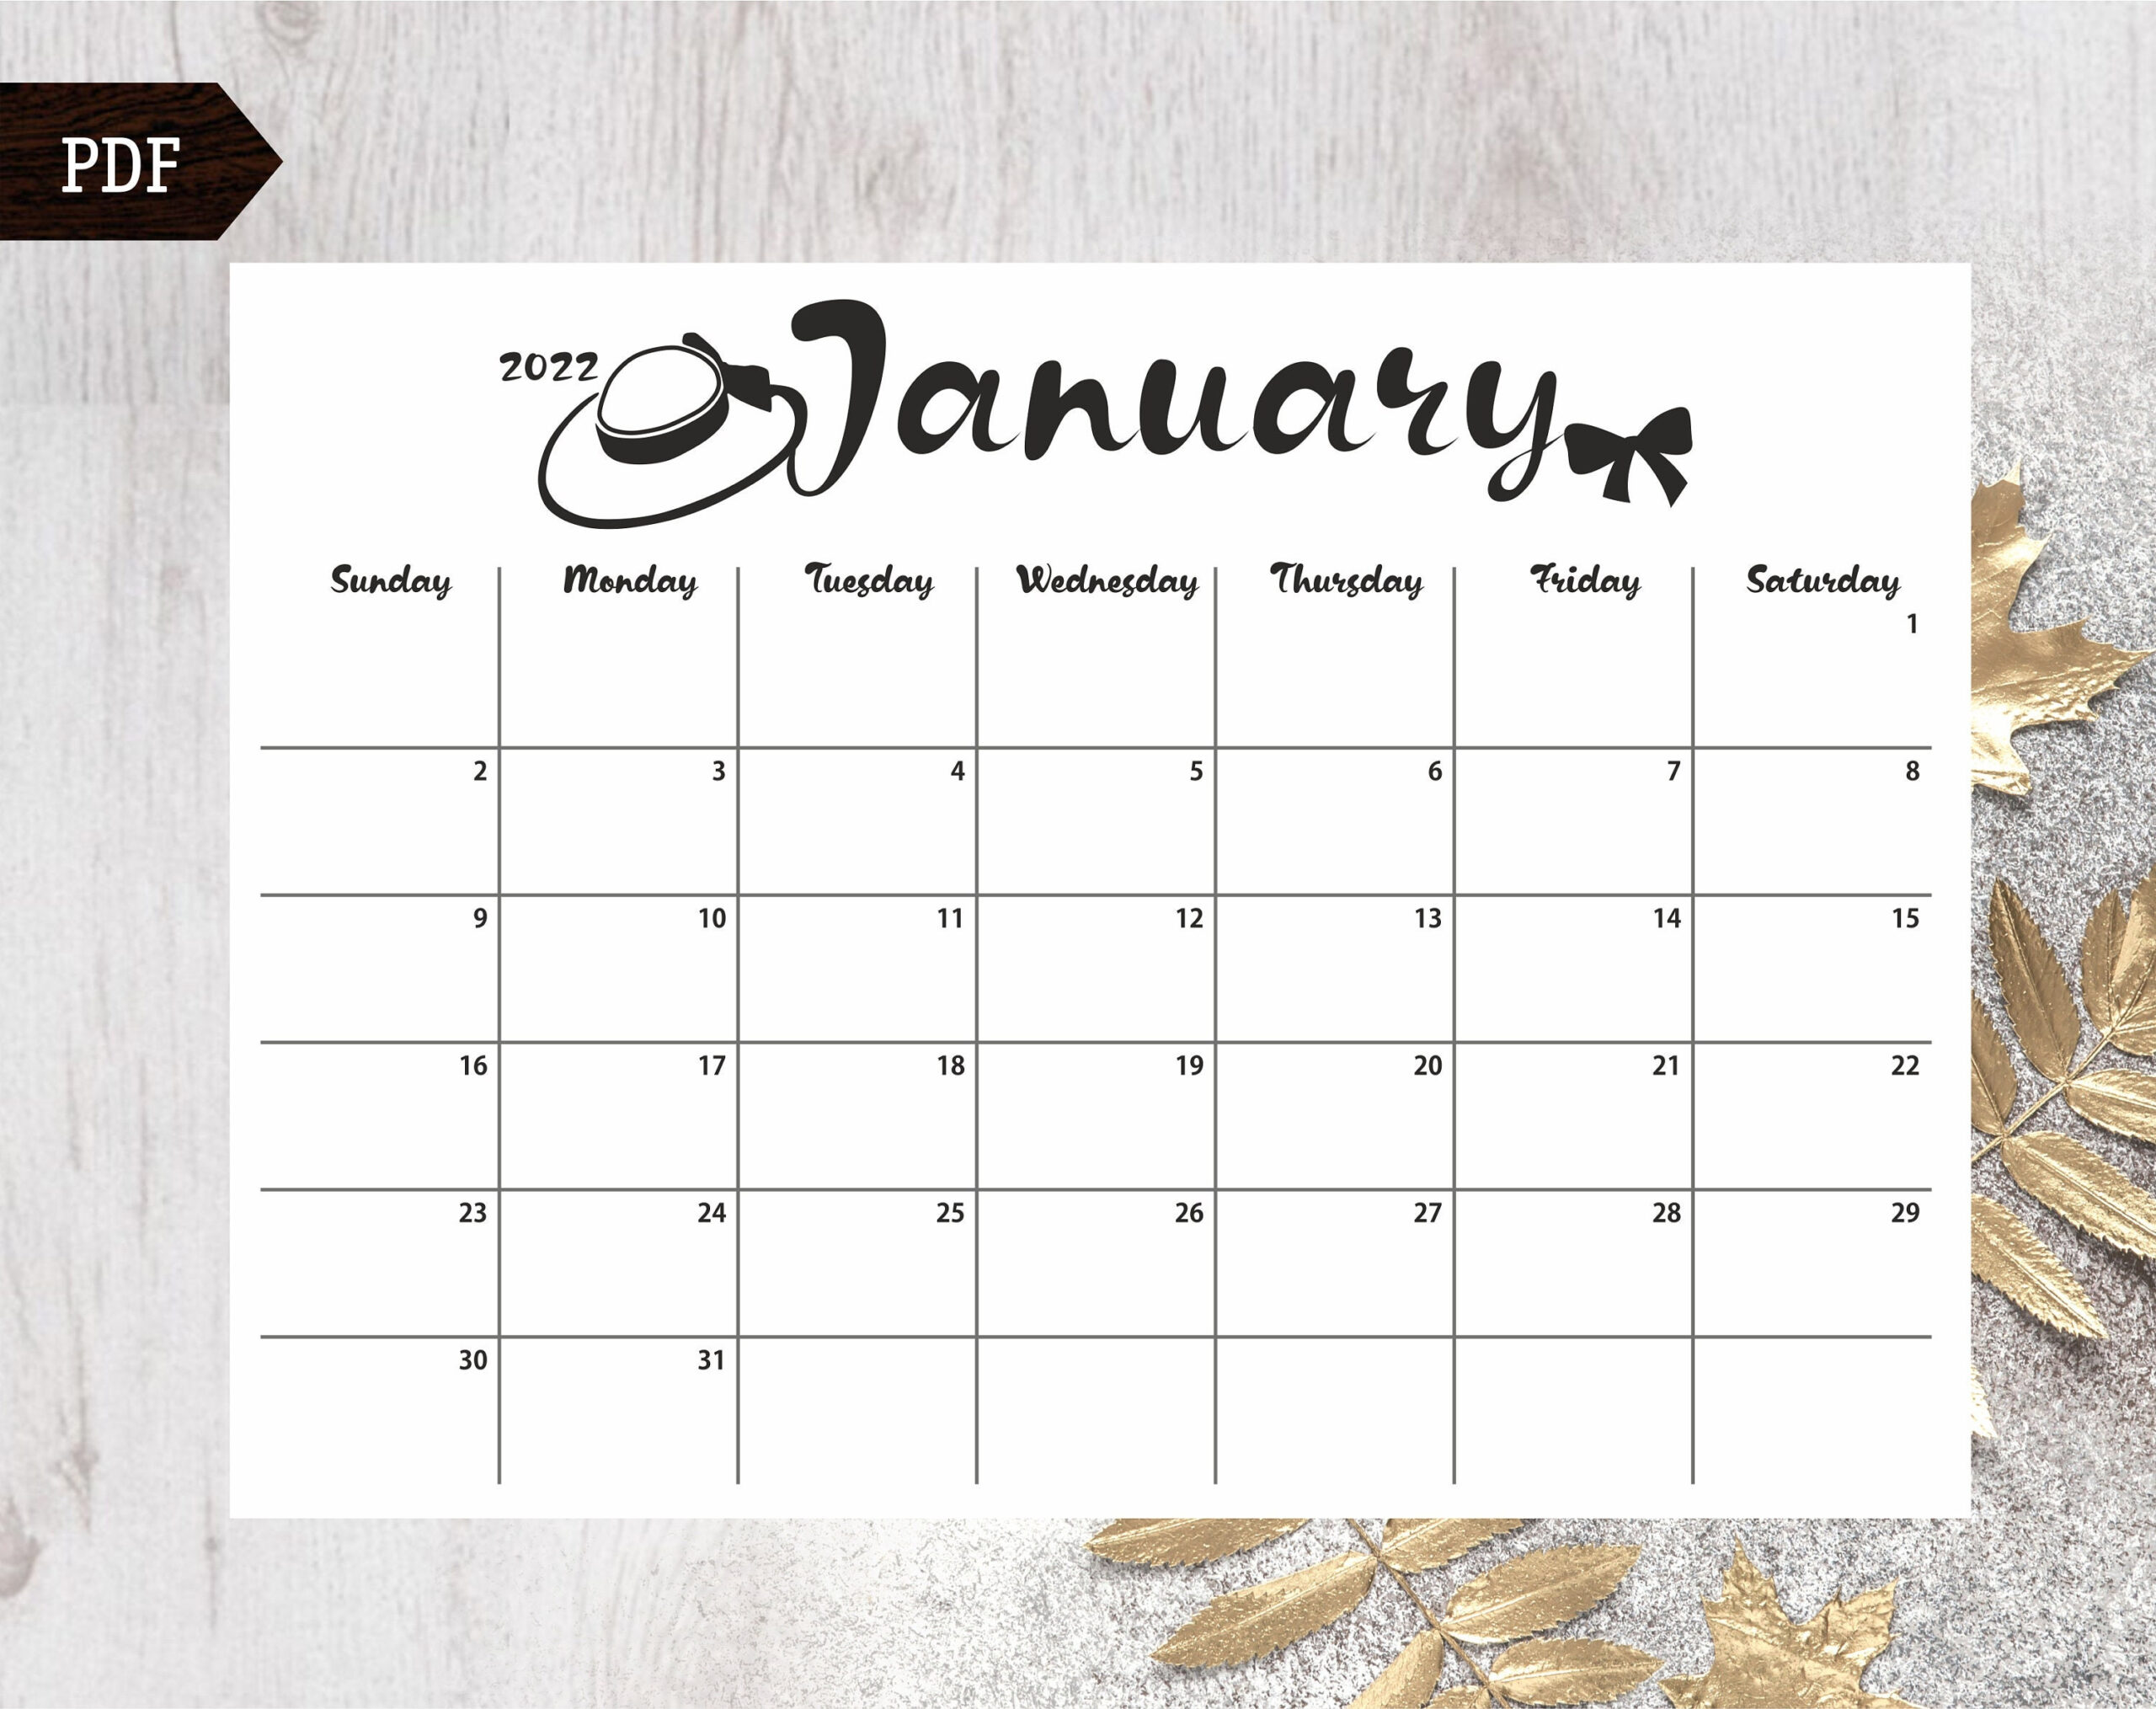 2022 White Calendar Wall Calendar Yearly Pdf Wall Calendar | Etsy-Free Printable Calendar 2022 Australia